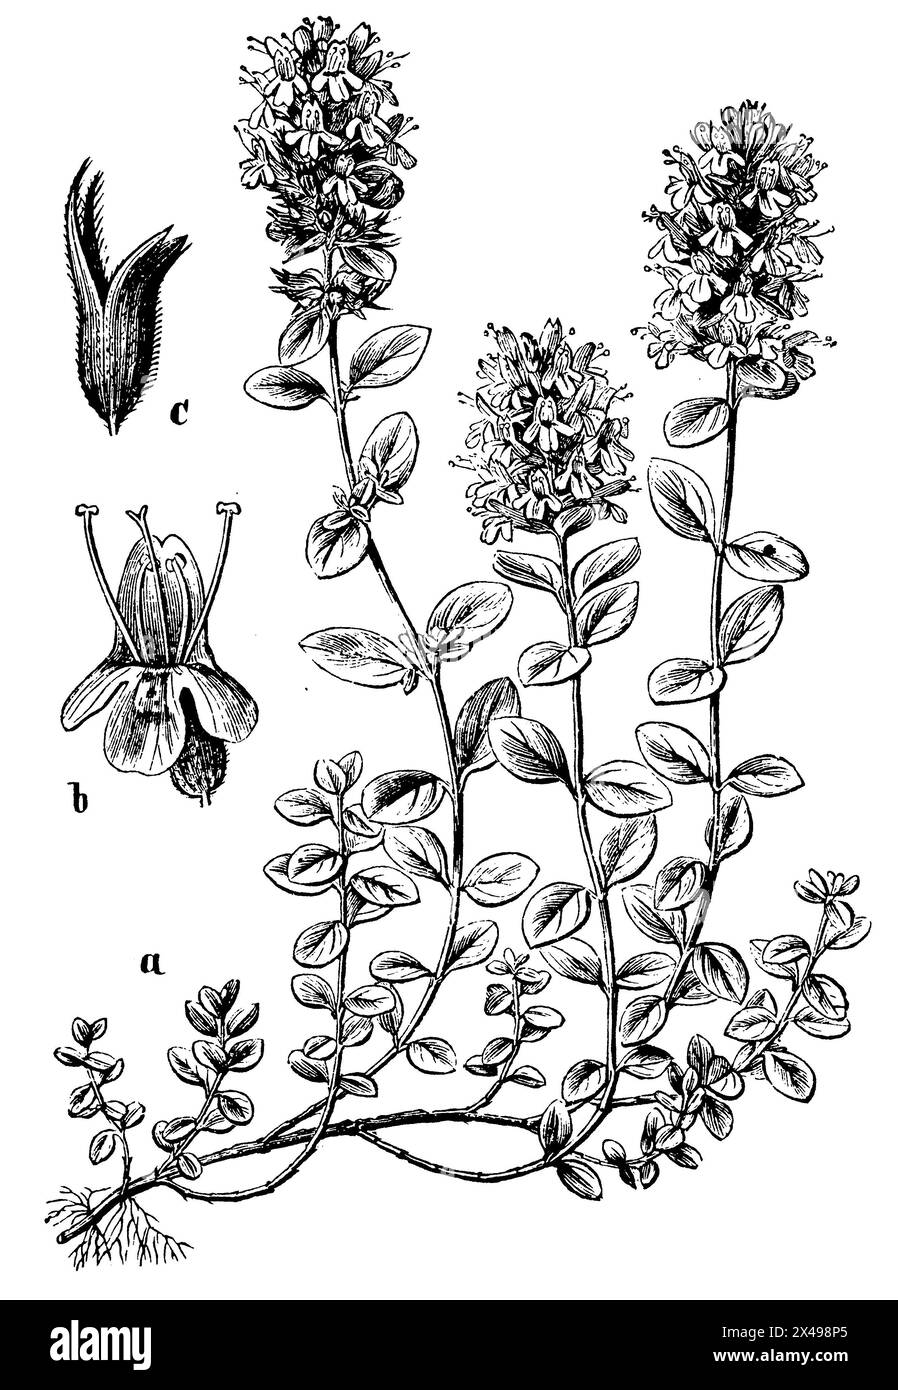 Thym de breckland, une plante, b corolle, c calice, Thymus serpyllum, (livre de botanique, 1898), Feld-Thymien, a Pflanze, b Blumenkrone, c Kelch, Serpolet, a plante, b corolle, c calice Banque D'Images